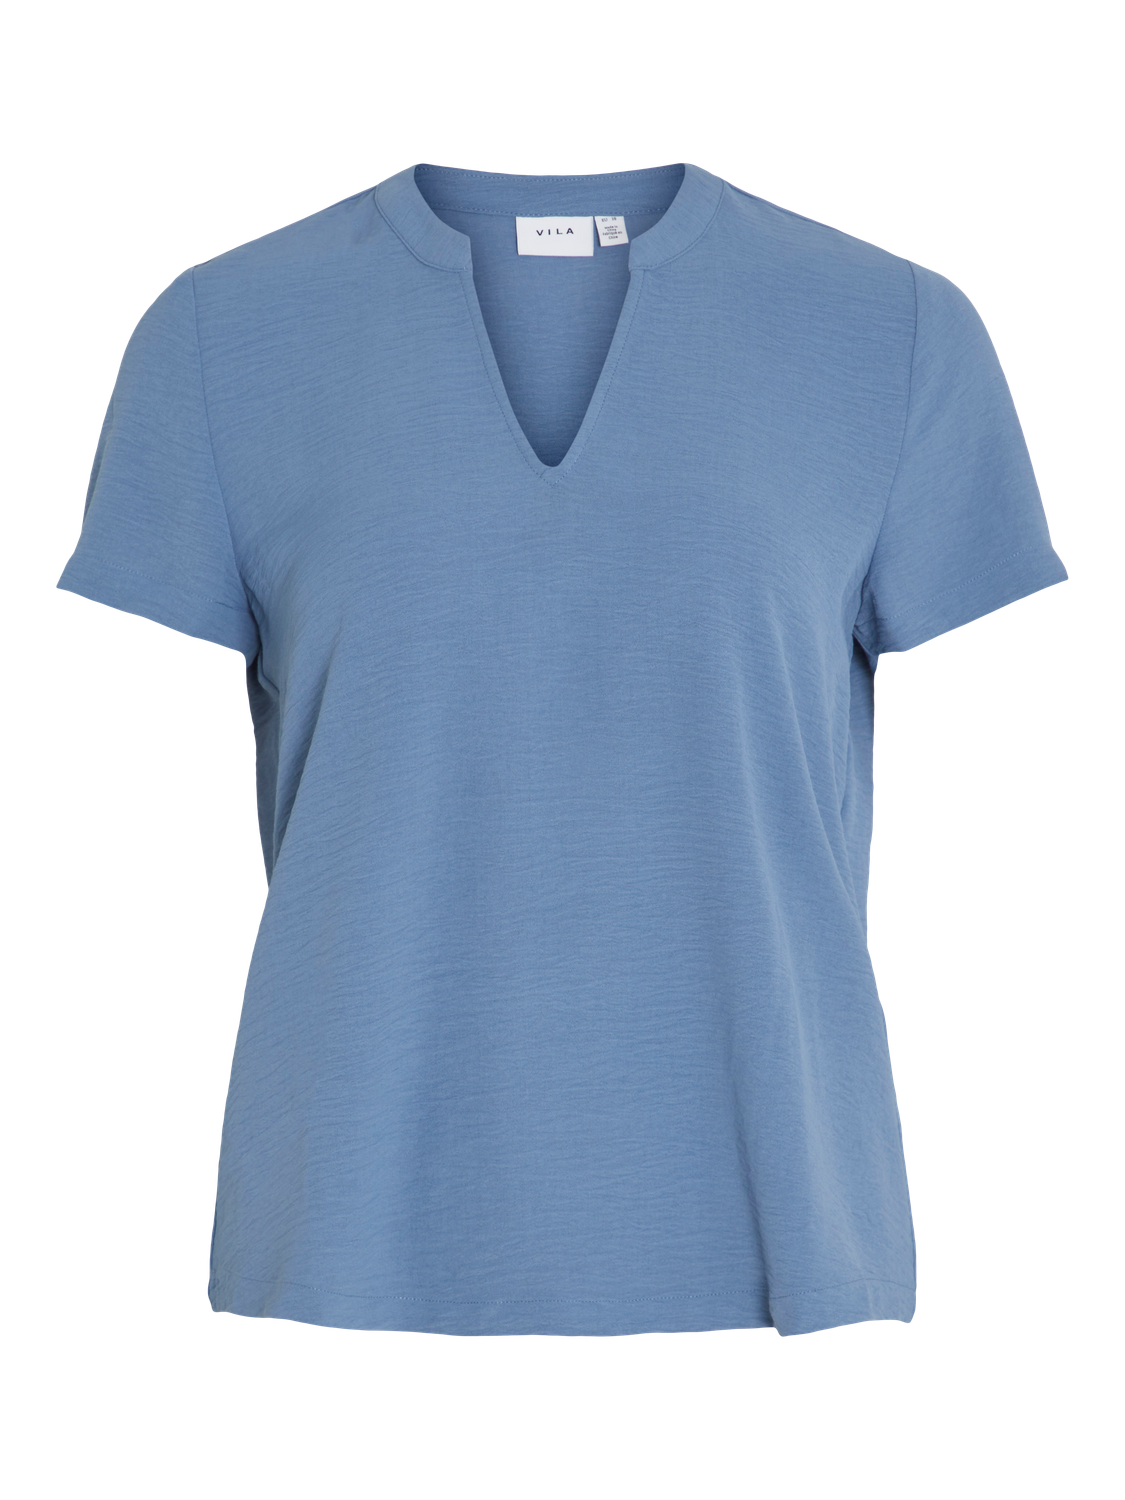 VIJANKO T-Shirts & Tops - Coronet Blue